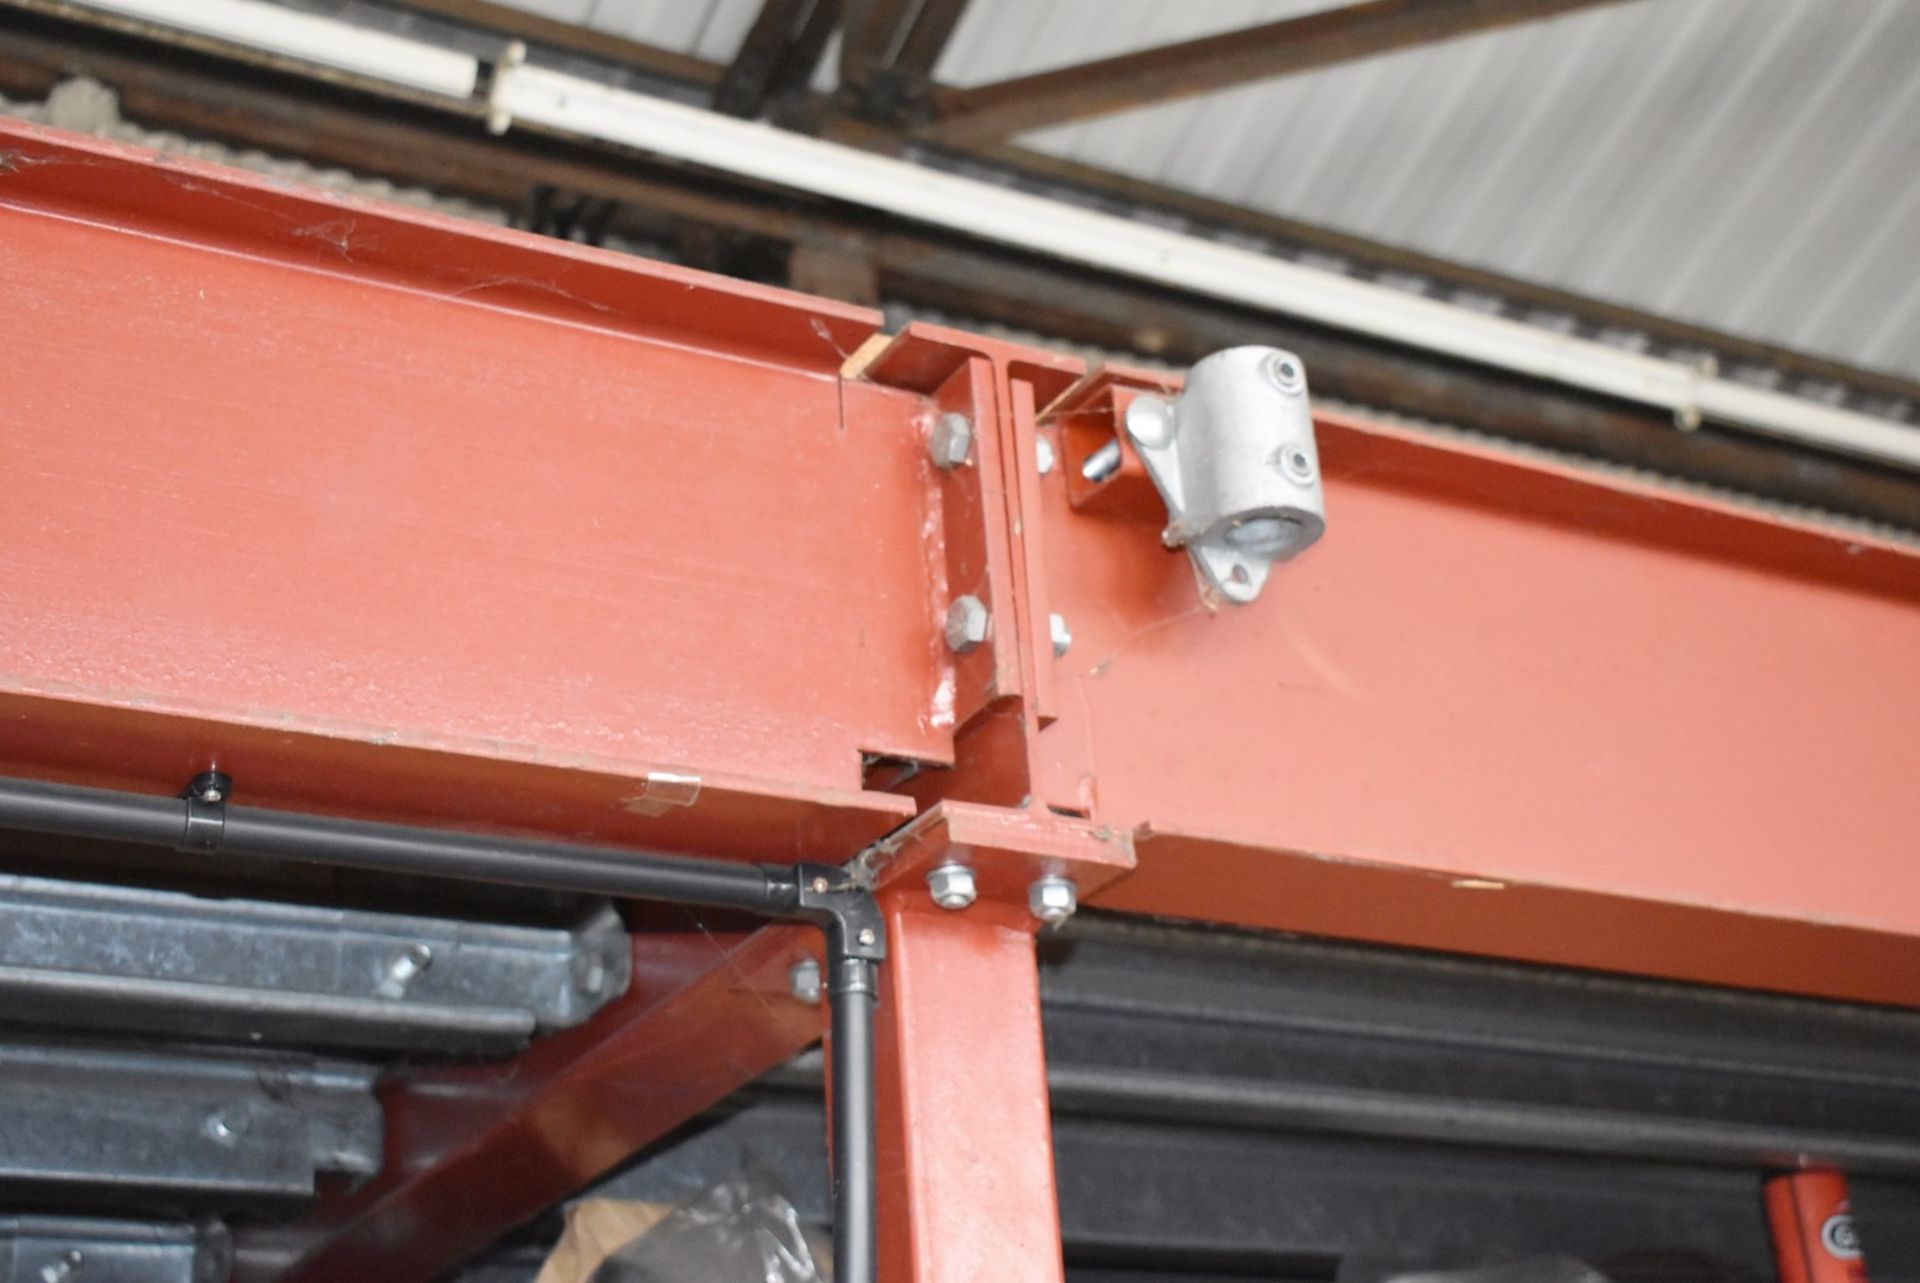 1 x Mezzanine Floor - Heavy Duty Steel Construction With Access Ladder - Size: W1000 x D325 cms - Image 4 of 18